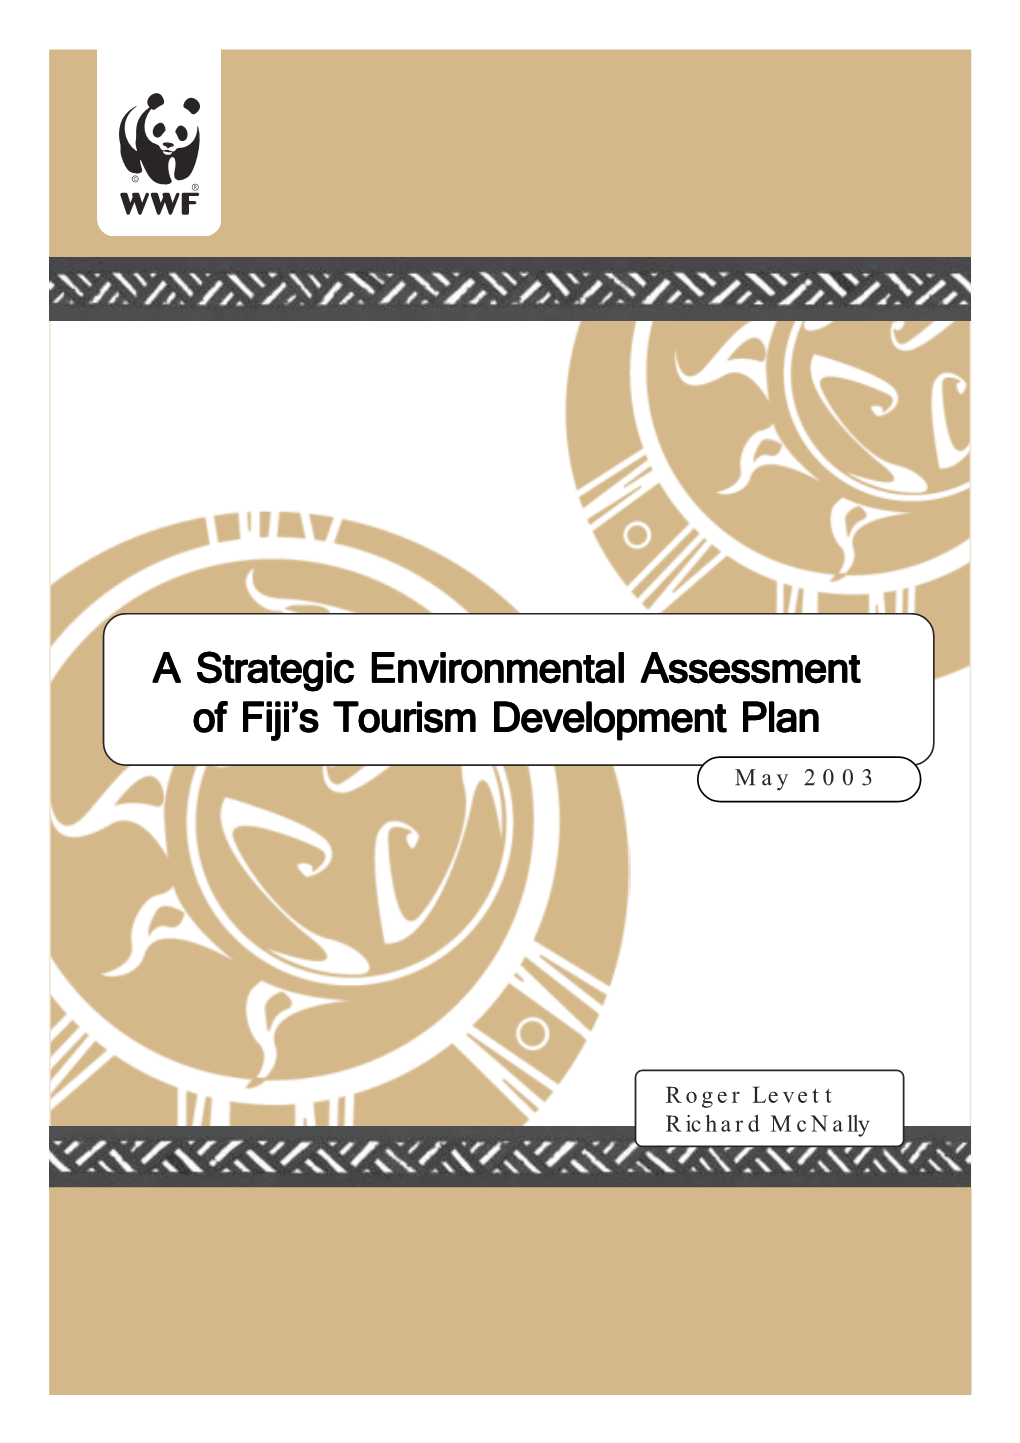 A Strategic Environmental Assessment of Fiji's Tourism